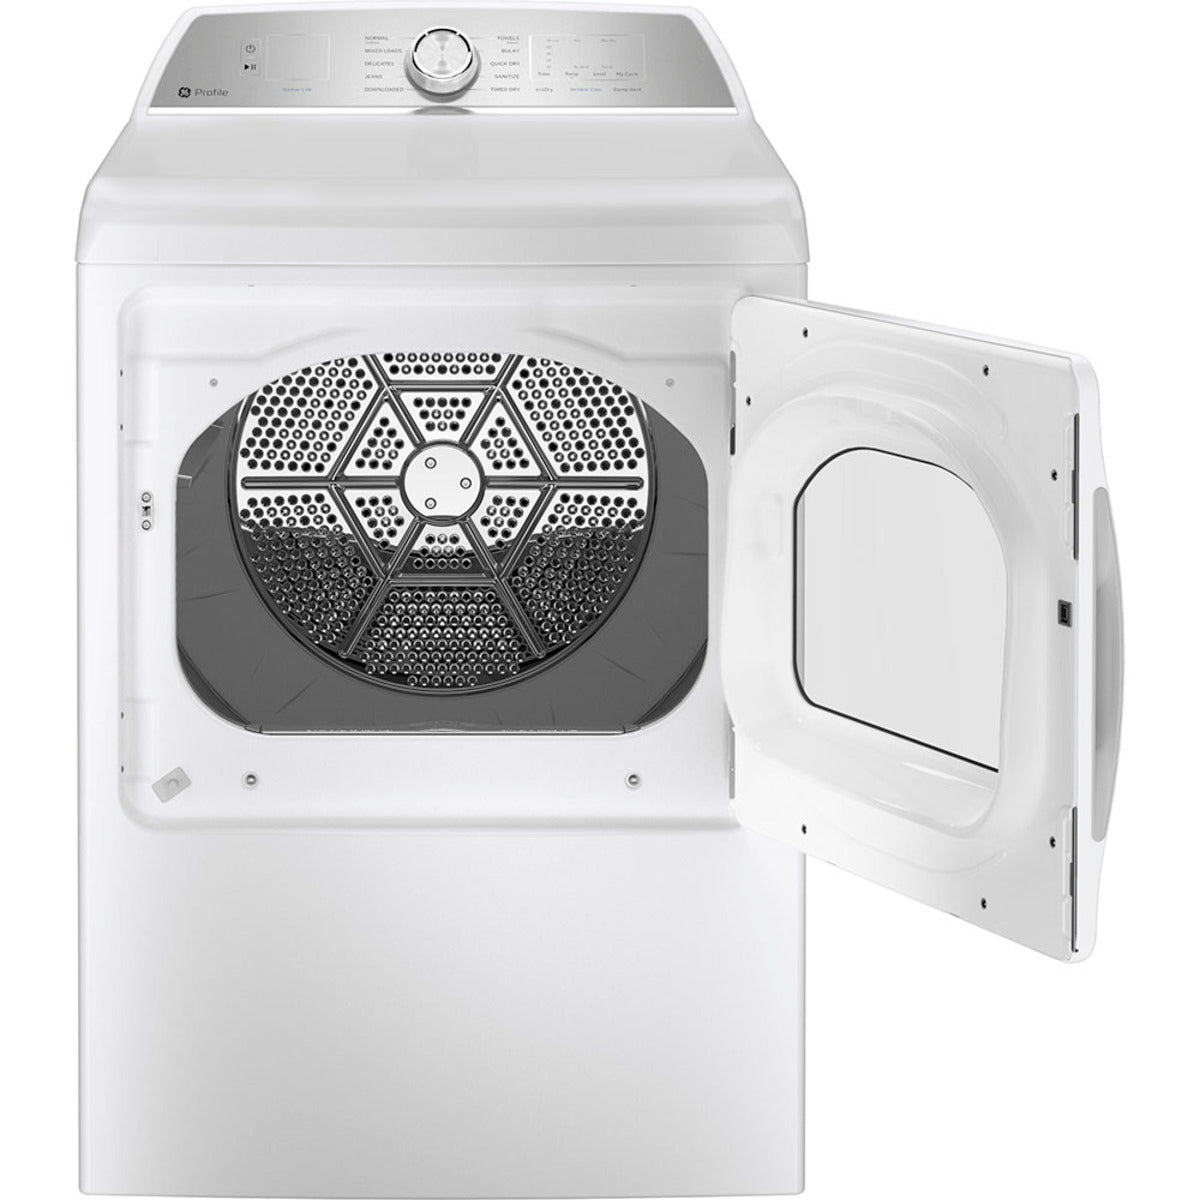 GE Profile - 7.4 cu. Ft  Electric Dryer in White - PTD60EBMRWS